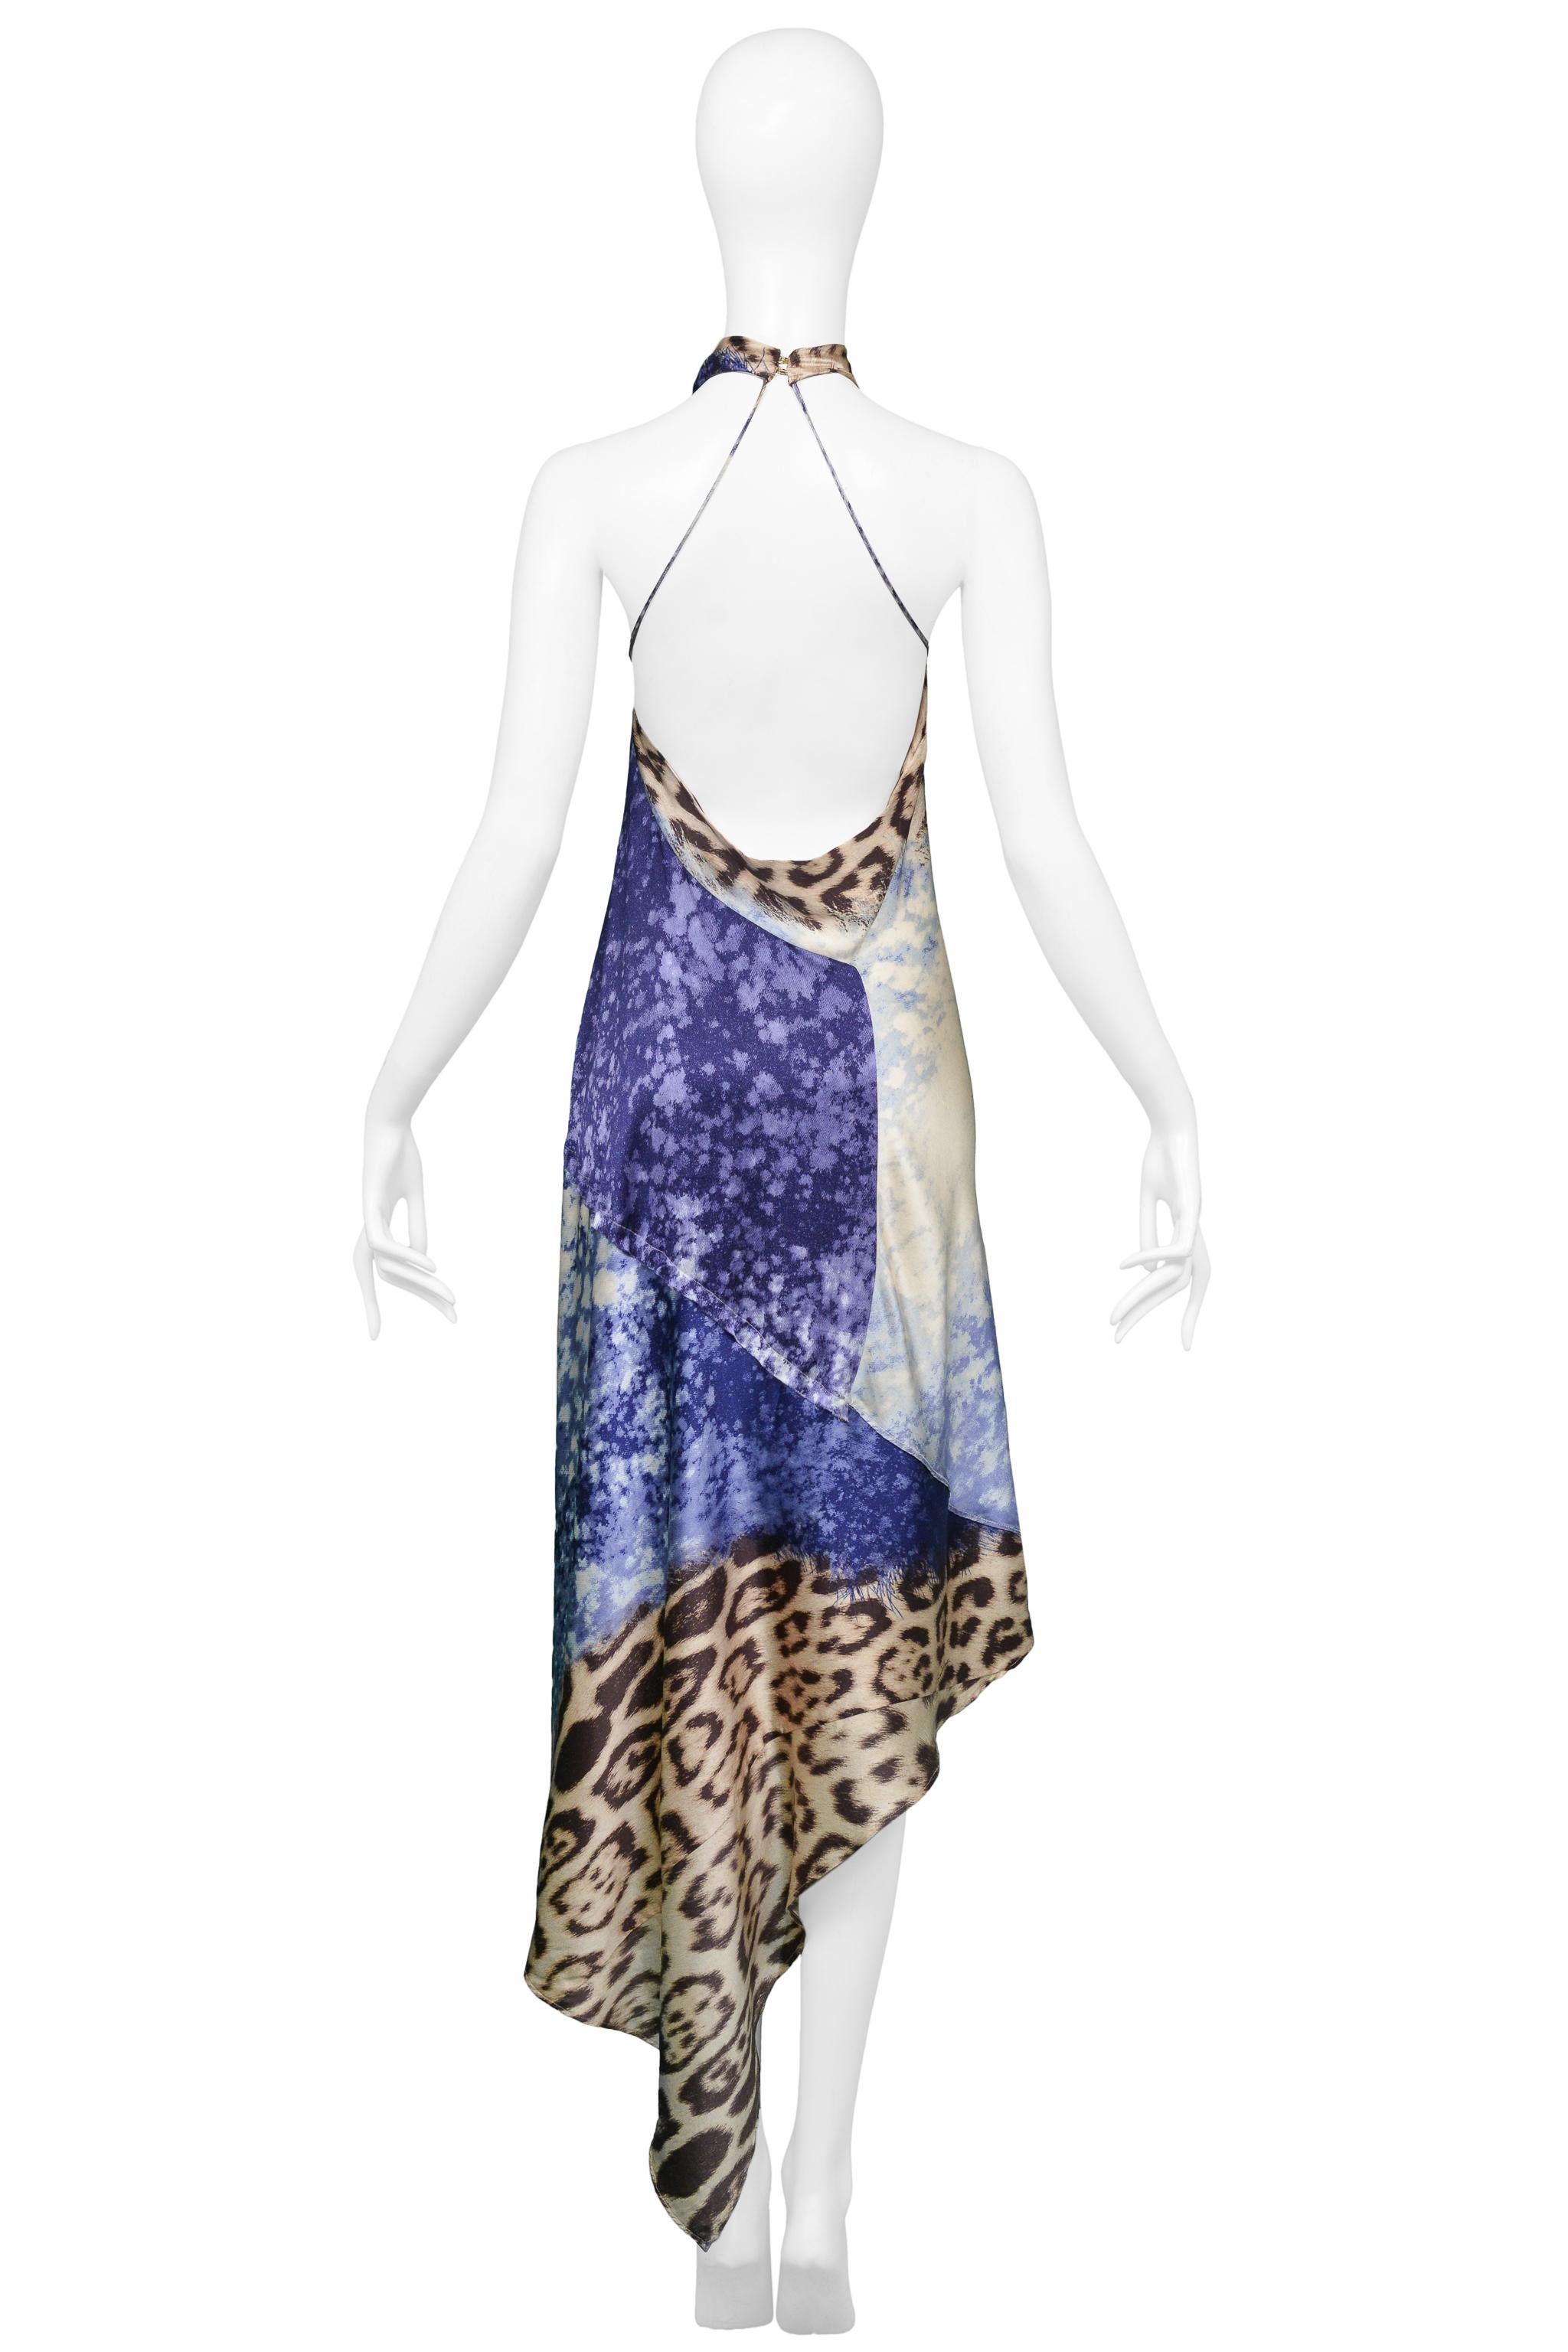 Roberto Cavalli Leopard & Blue Acid Print Halter Dress 2001 In Excellent Condition In Los Angeles, CA